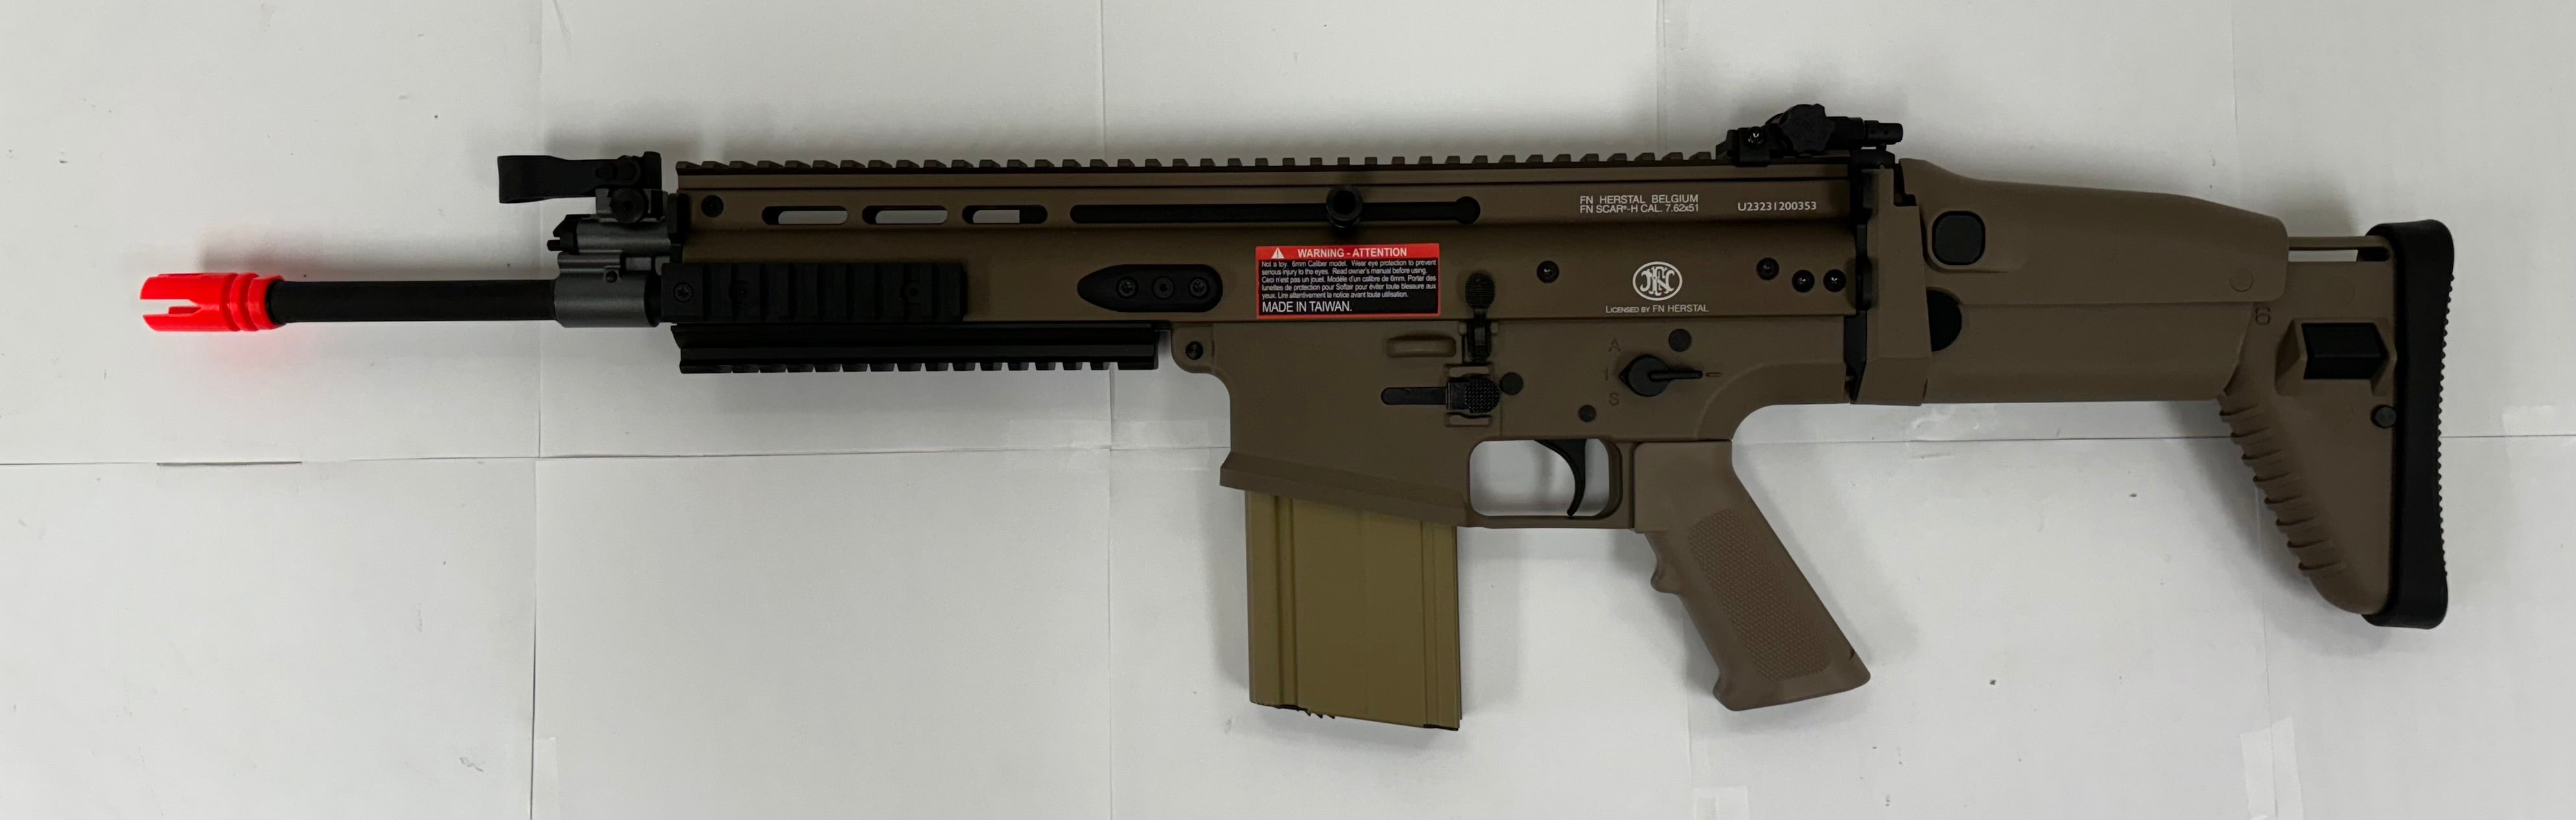 EMG FN Herstal Licensed SCAR Heavy Airsoft AEG Rifle by VFC (Standard / Tan)